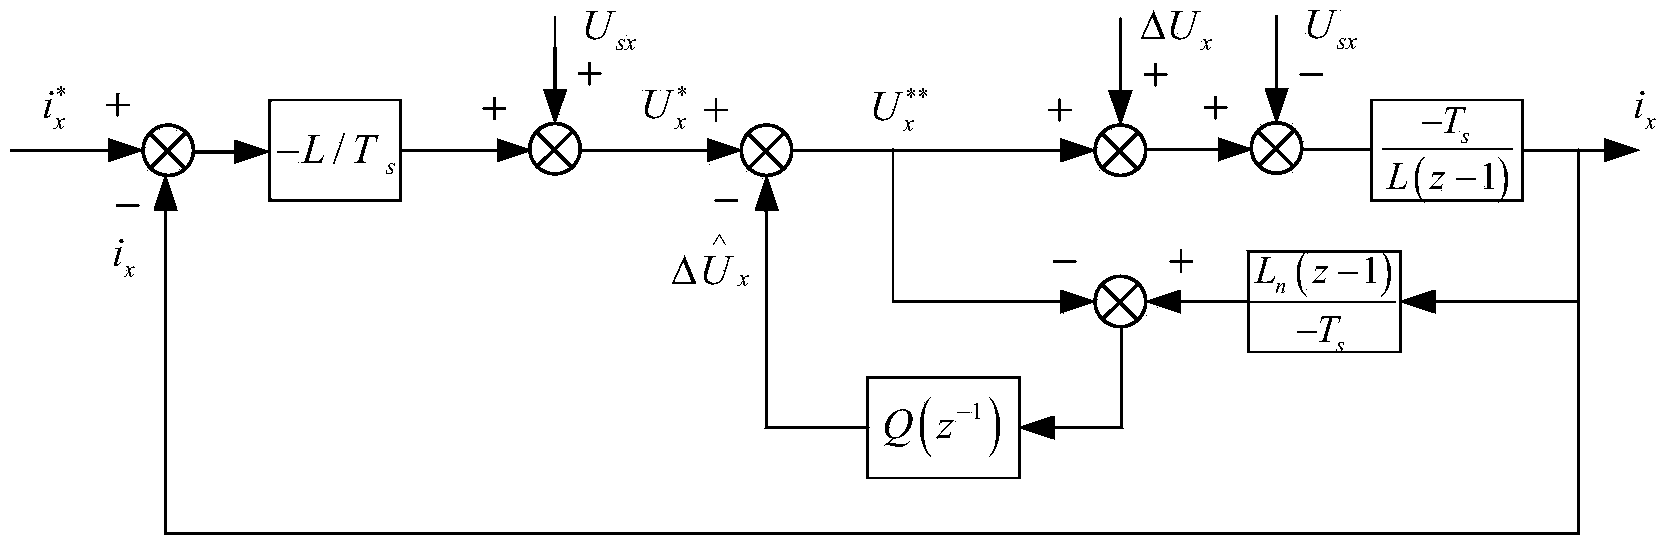 Self-adaptation dead-time compensation method for H-bridge cascade STATCOM (static synchronous compensator)